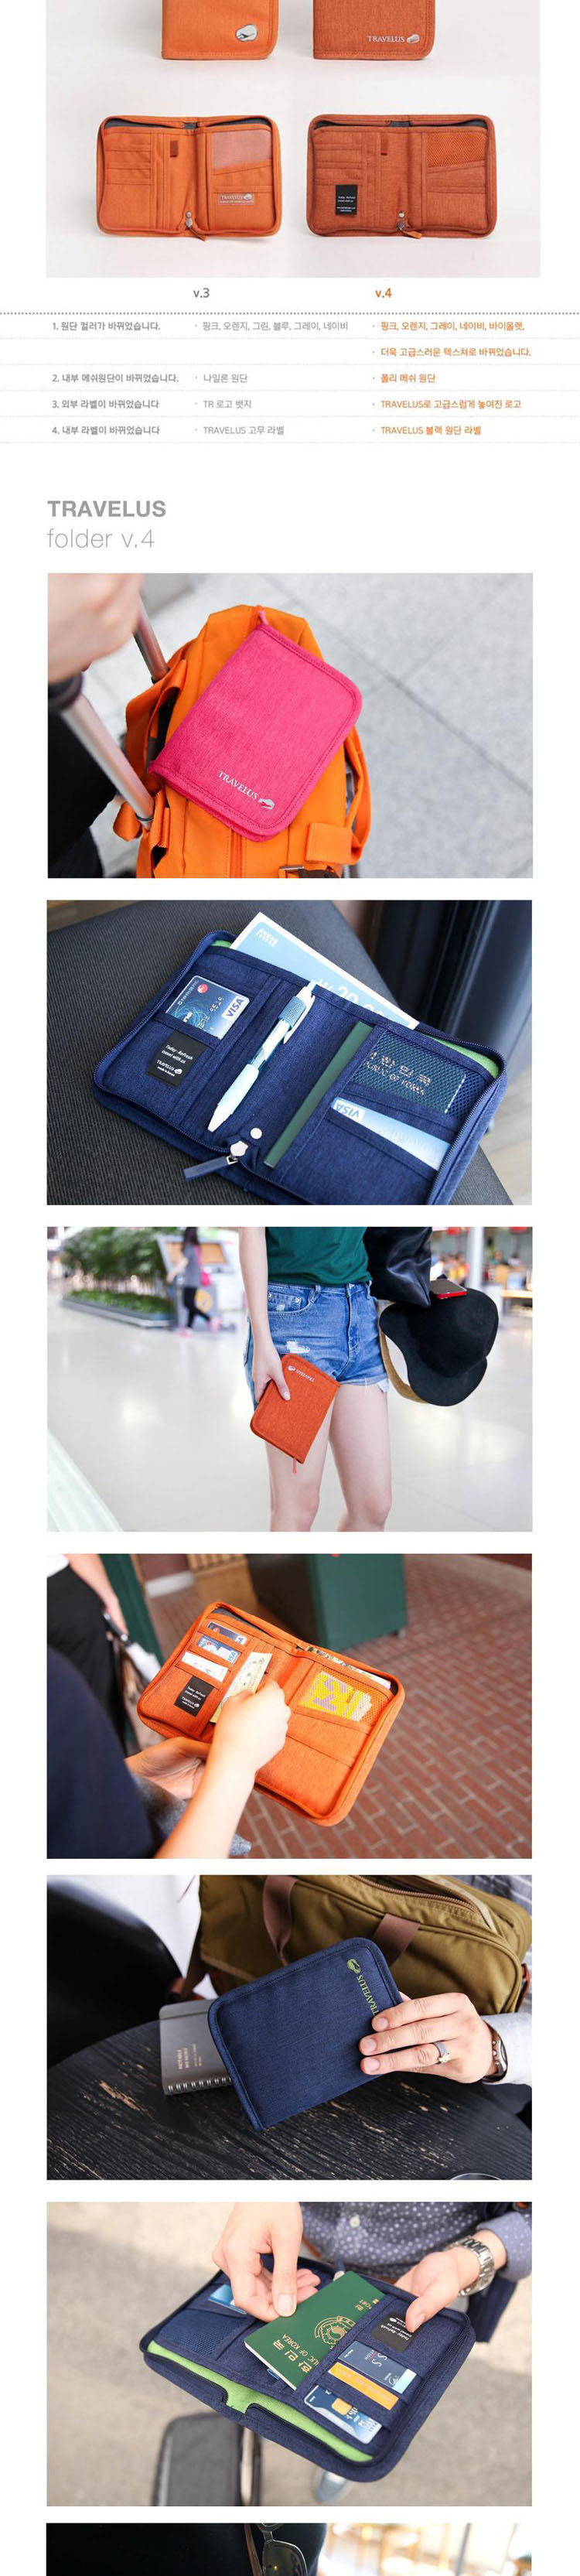 Short passport, Korean, Korean, multi-functional, bag, passport, passport, document bag, travel, collection bag, bag and bag3